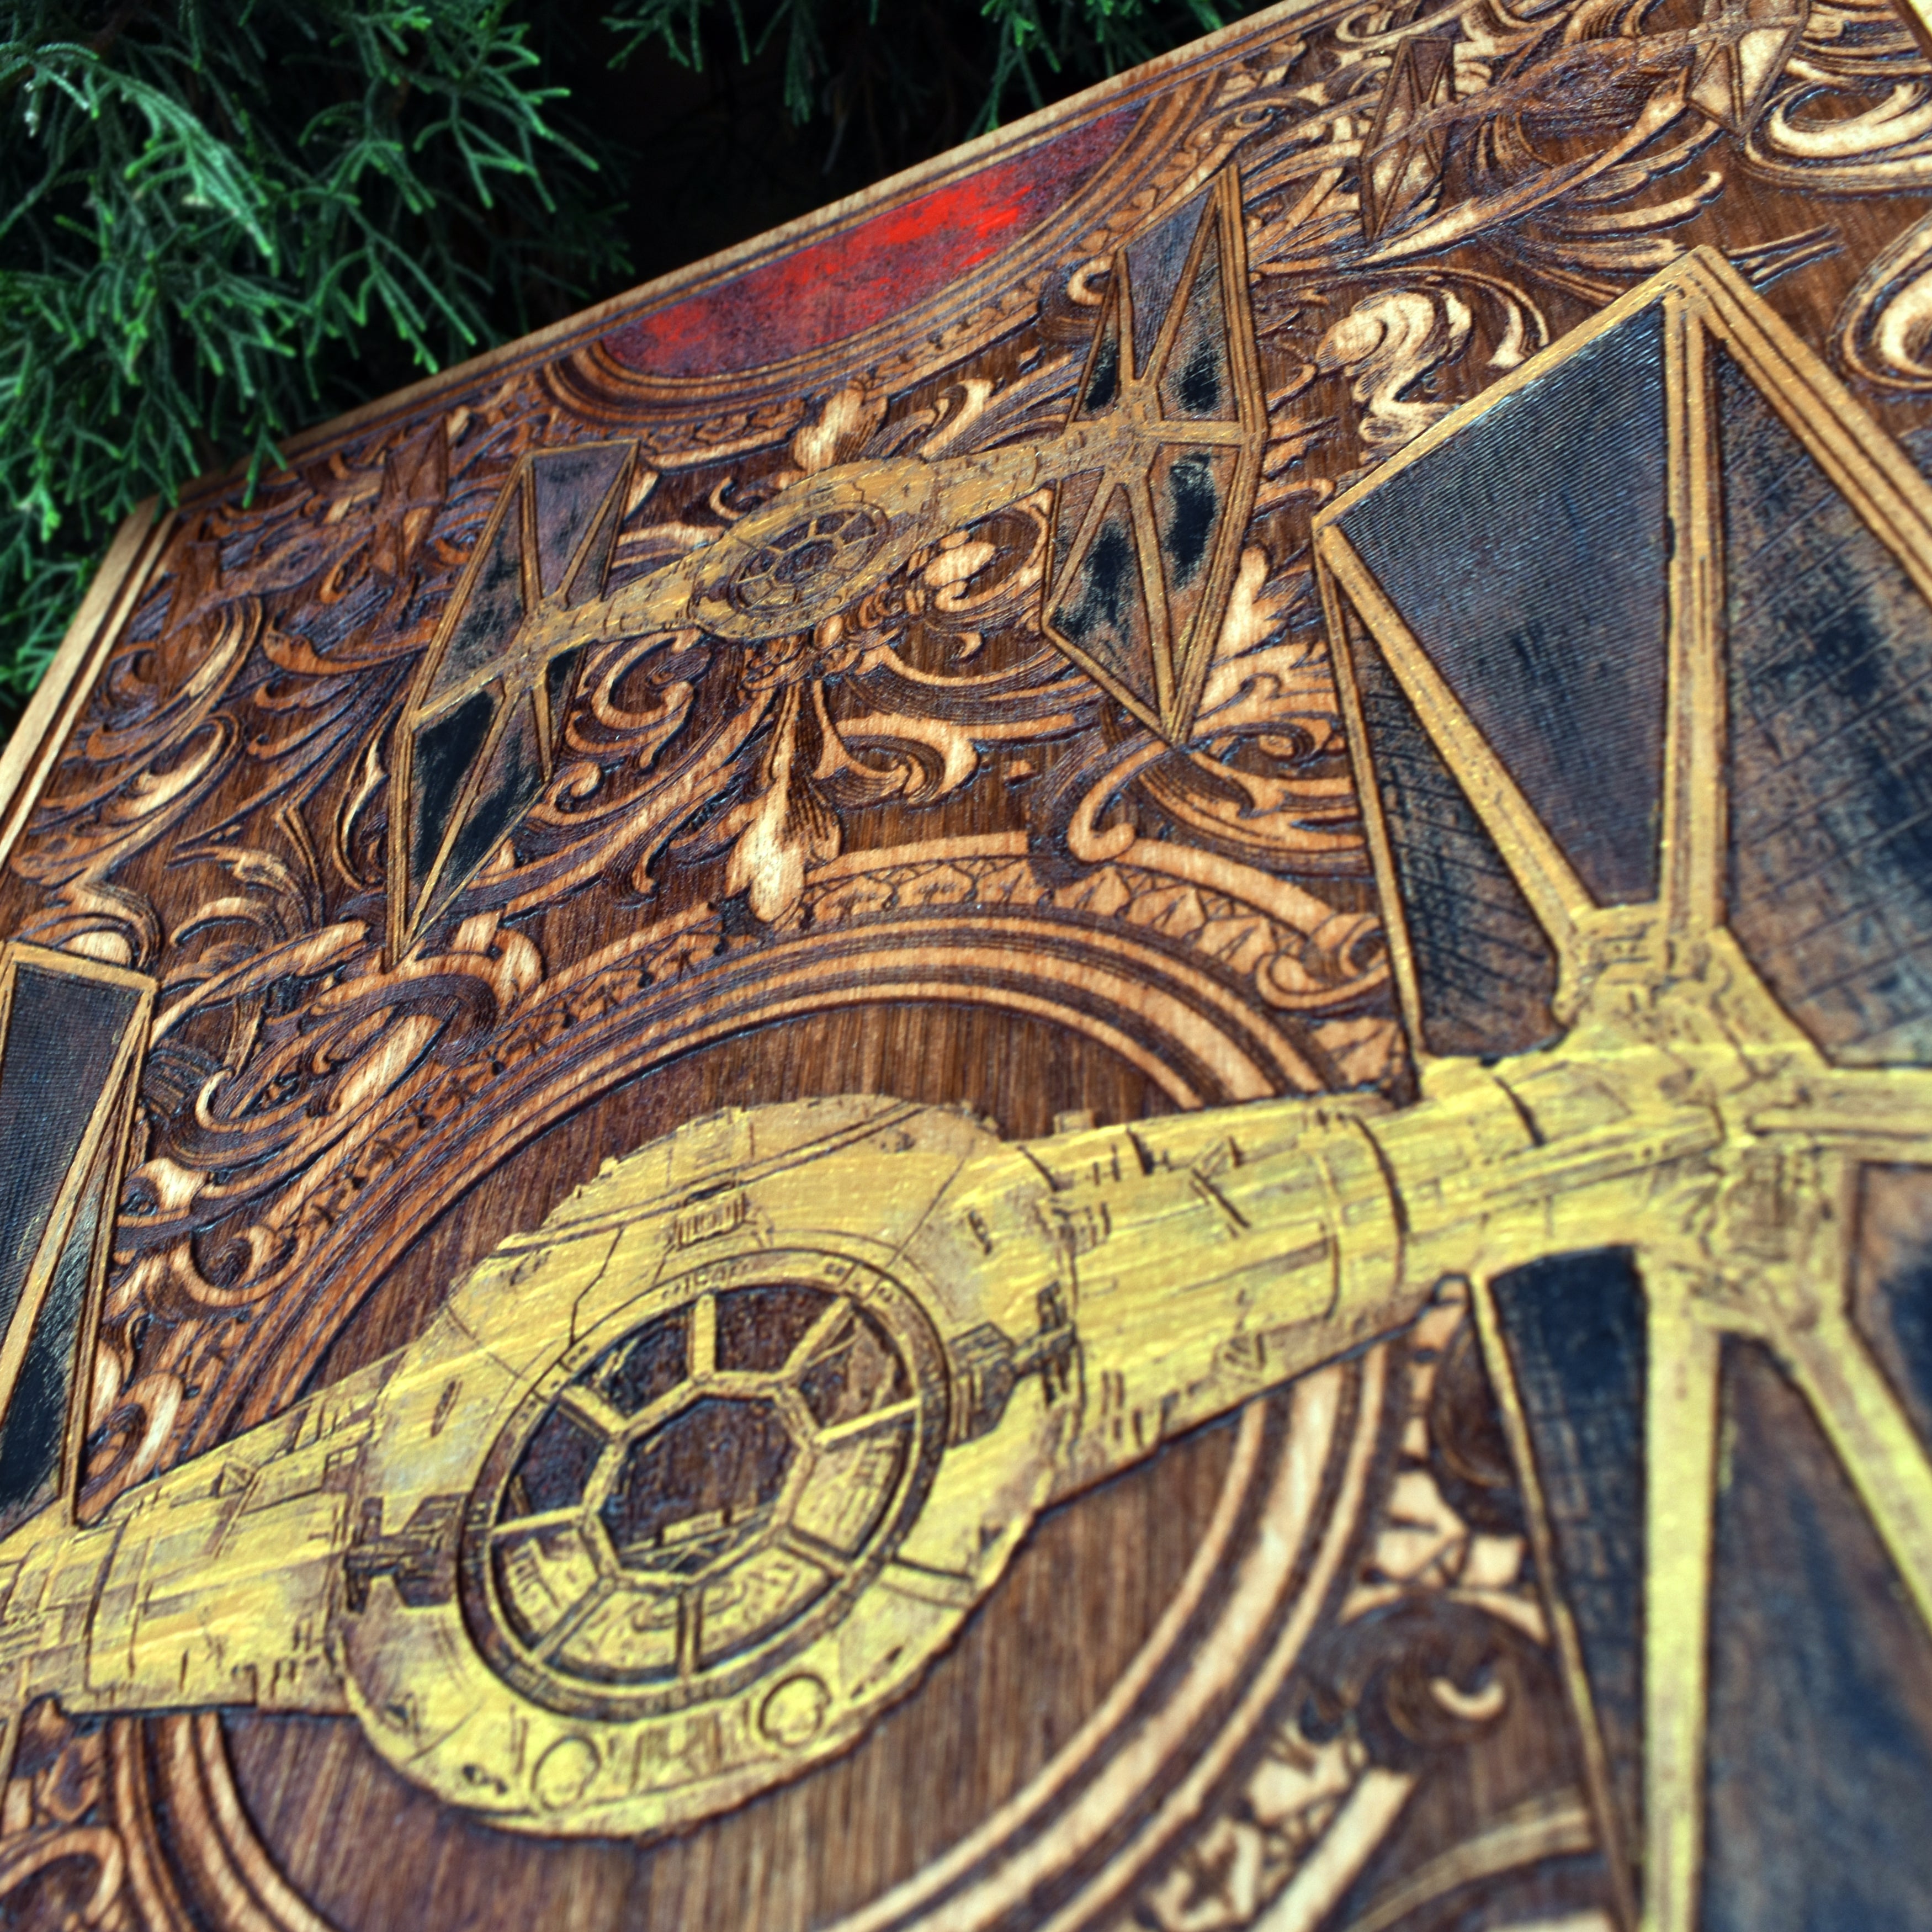 Intergalactic Ship XI - Large Cedar Wood - Hand Painted